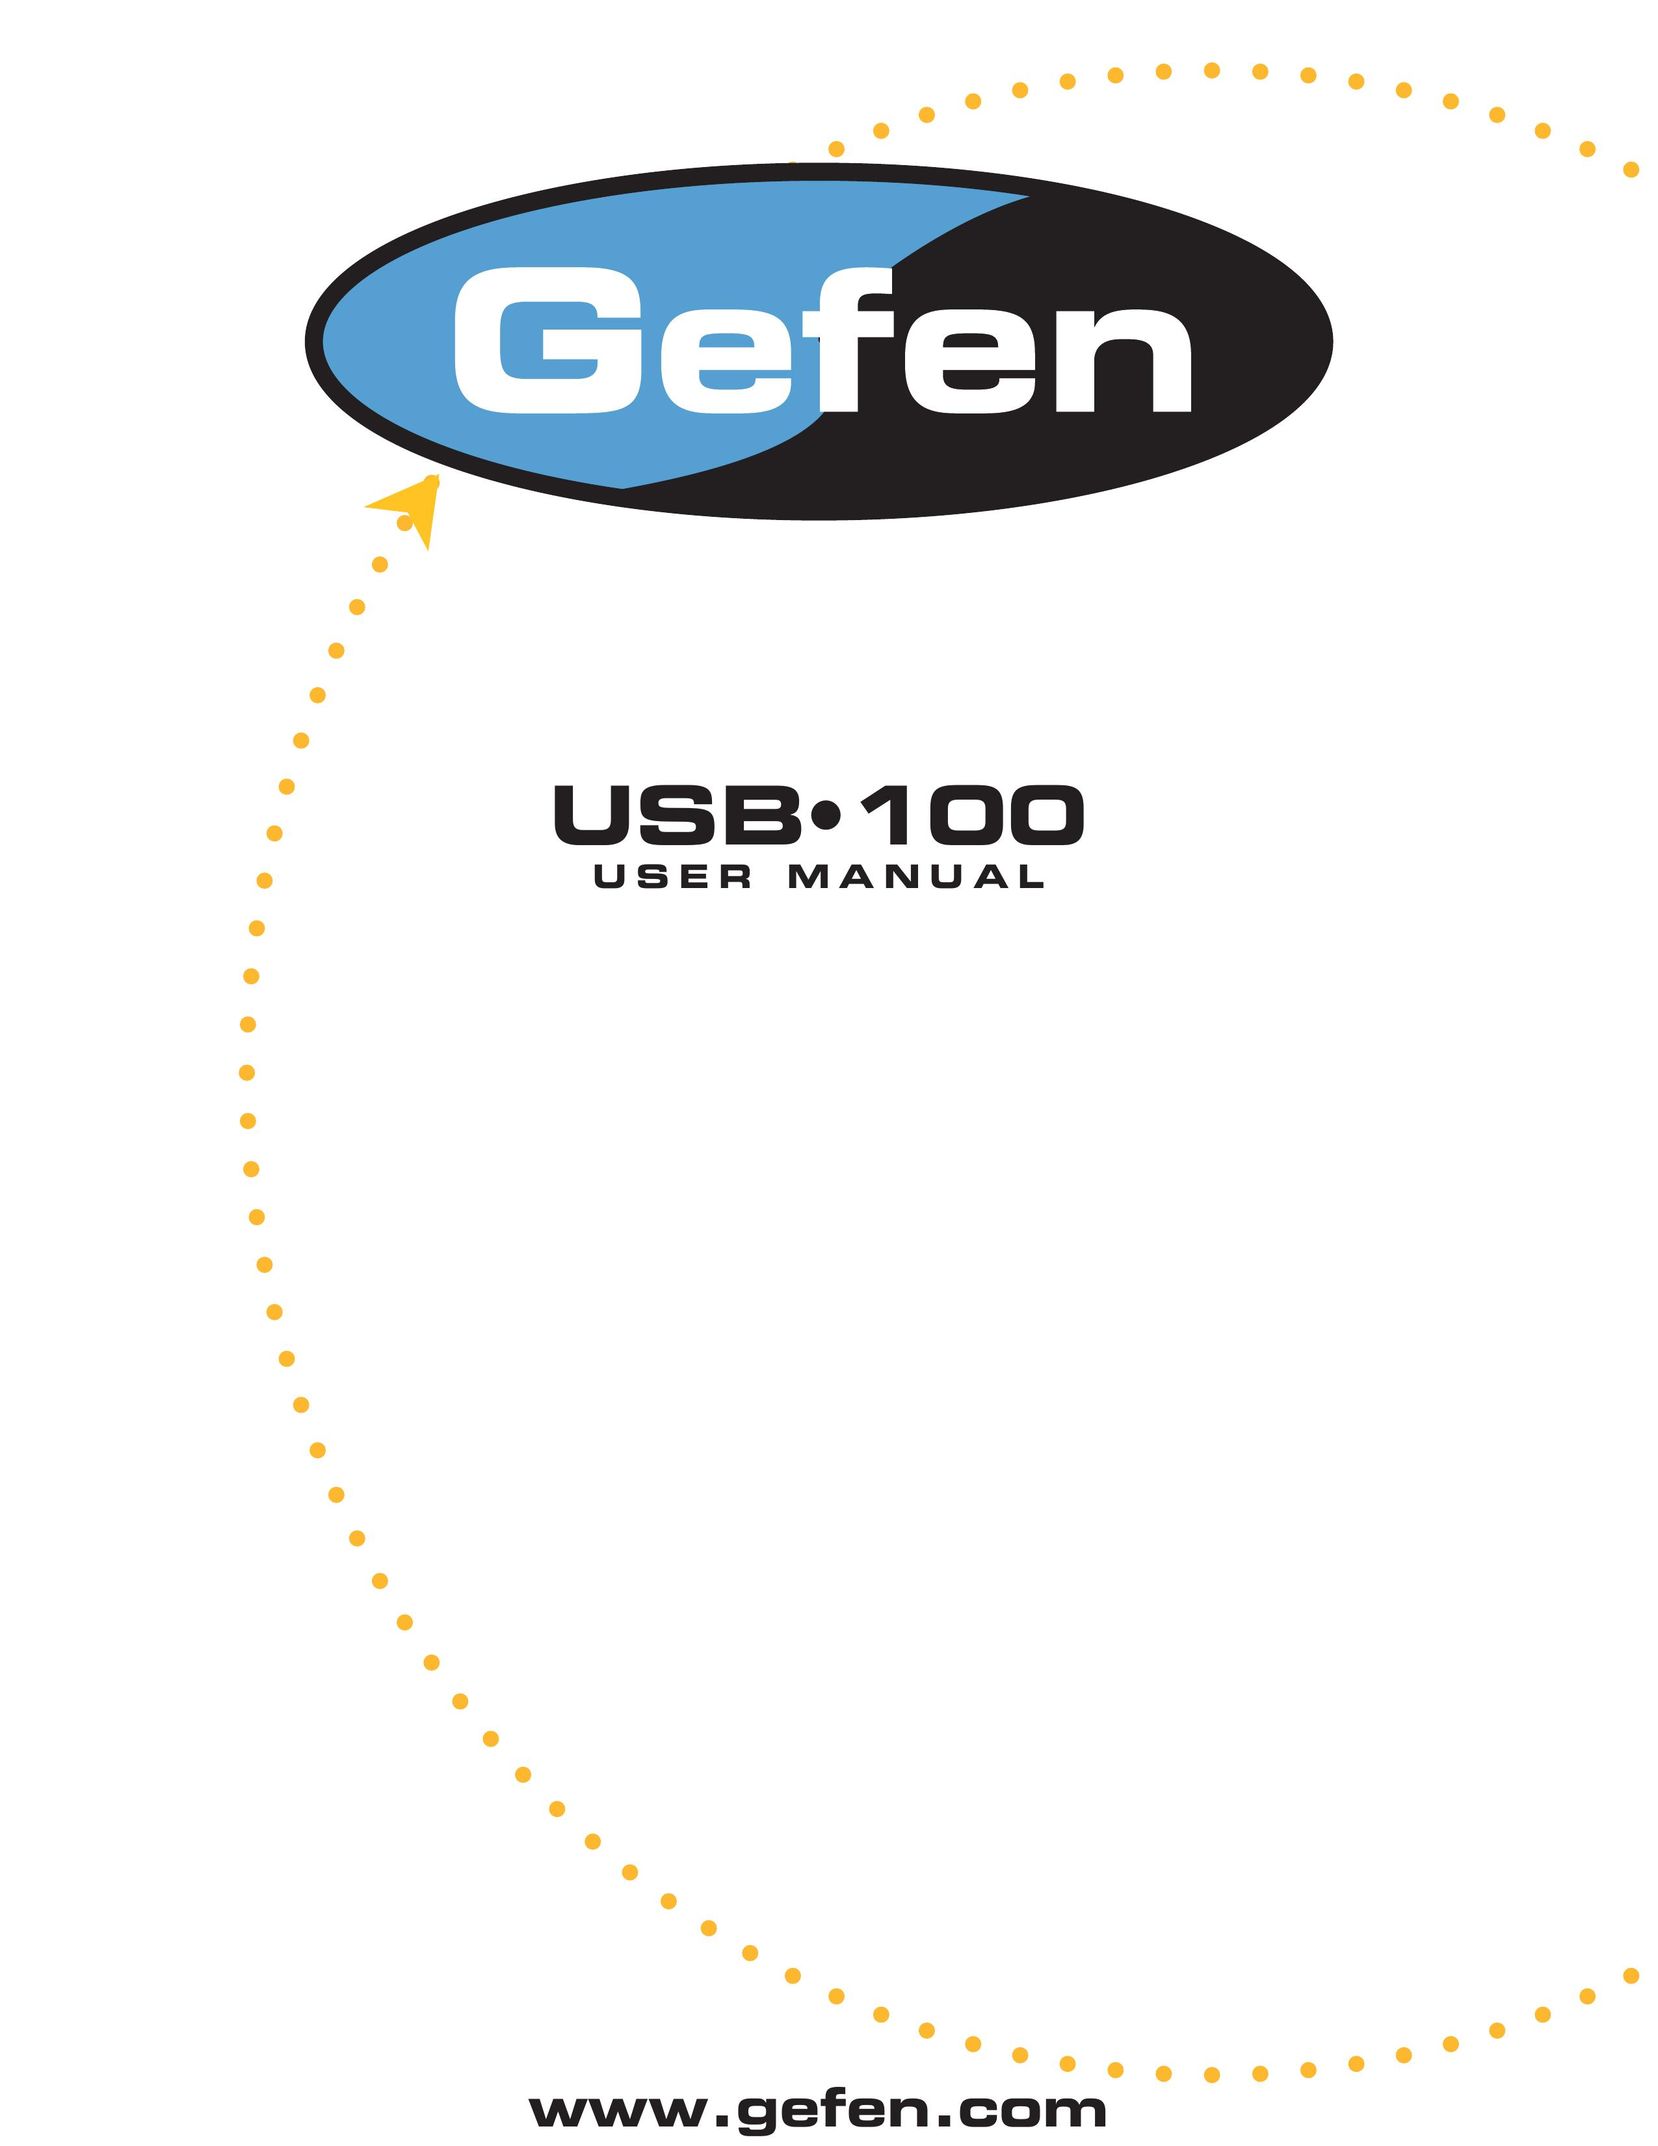 Gefen USB100 Network Card User Manual